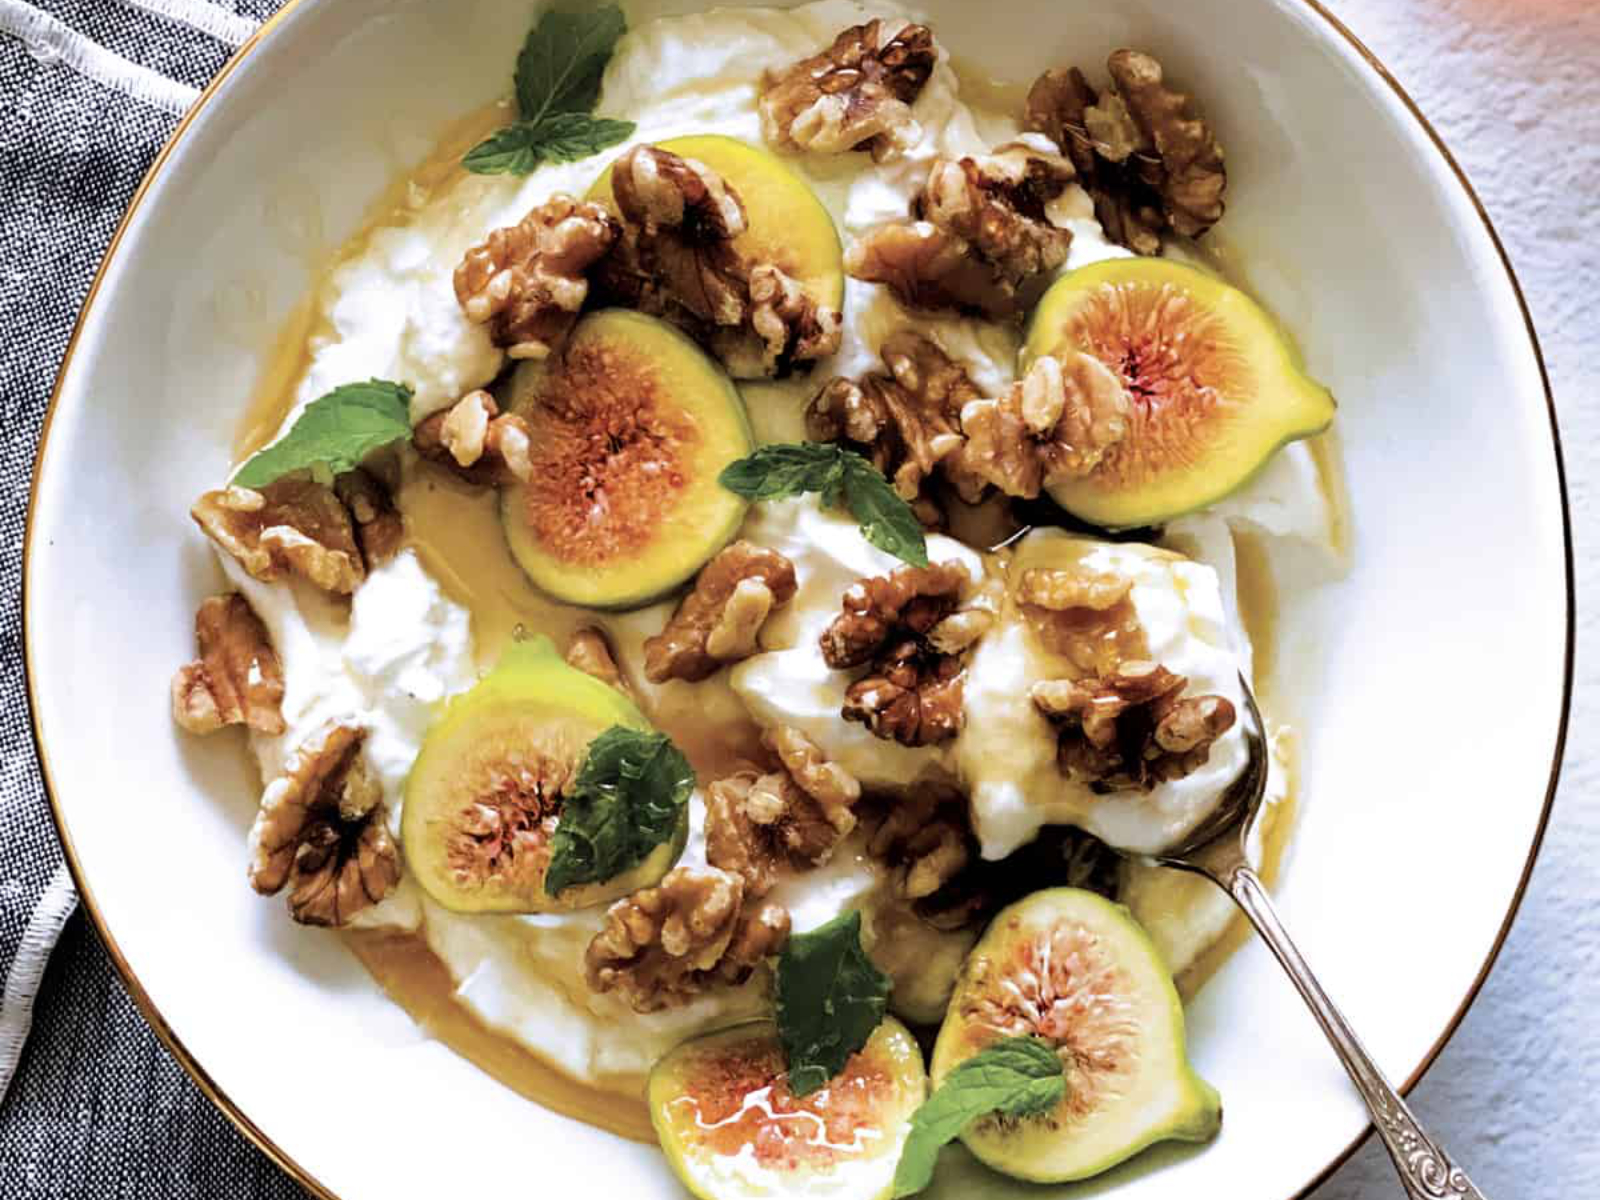 Greek Yogurt with Figs and Walnuts